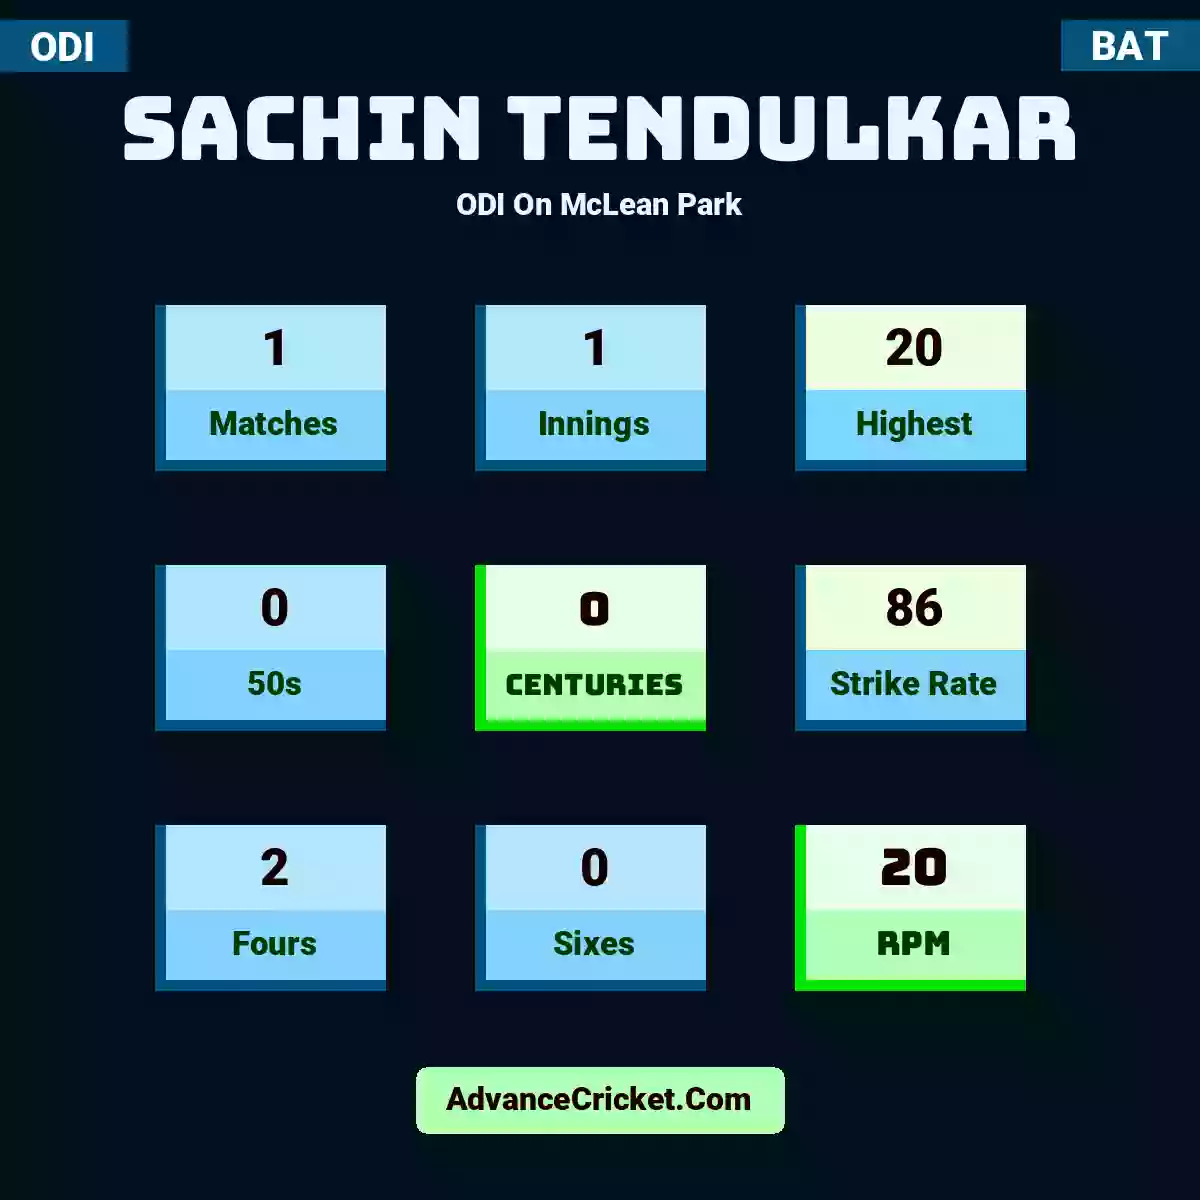 Sachin Tendulkar ODI  On McLean Park, Sachin Tendulkar played 1 matches, scored 20 runs as highest, 0 half-centuries, and 0 centuries, with a strike rate of 86. S.Tendulkar hit 2 fours and 0 sixes, with an RPM of 20.